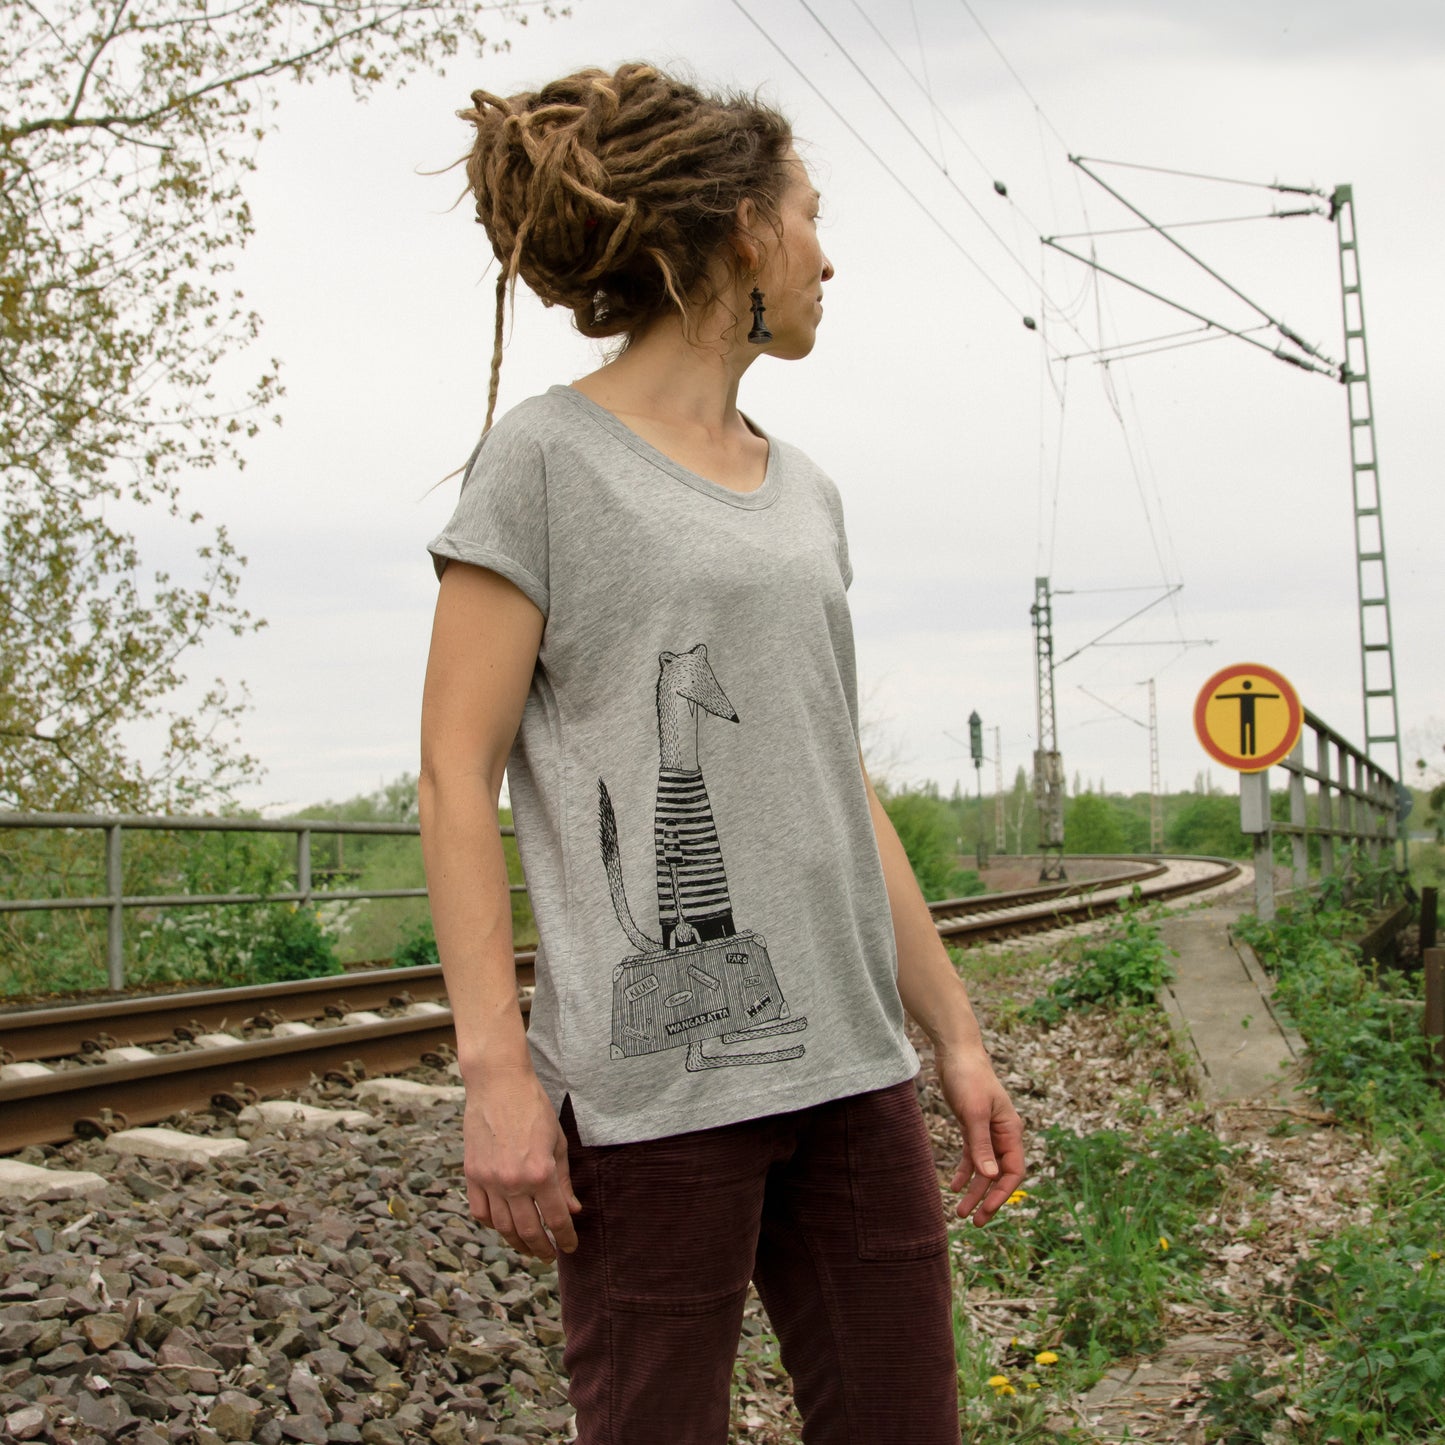 Reisewiesel T-Shirt in heather grey XS